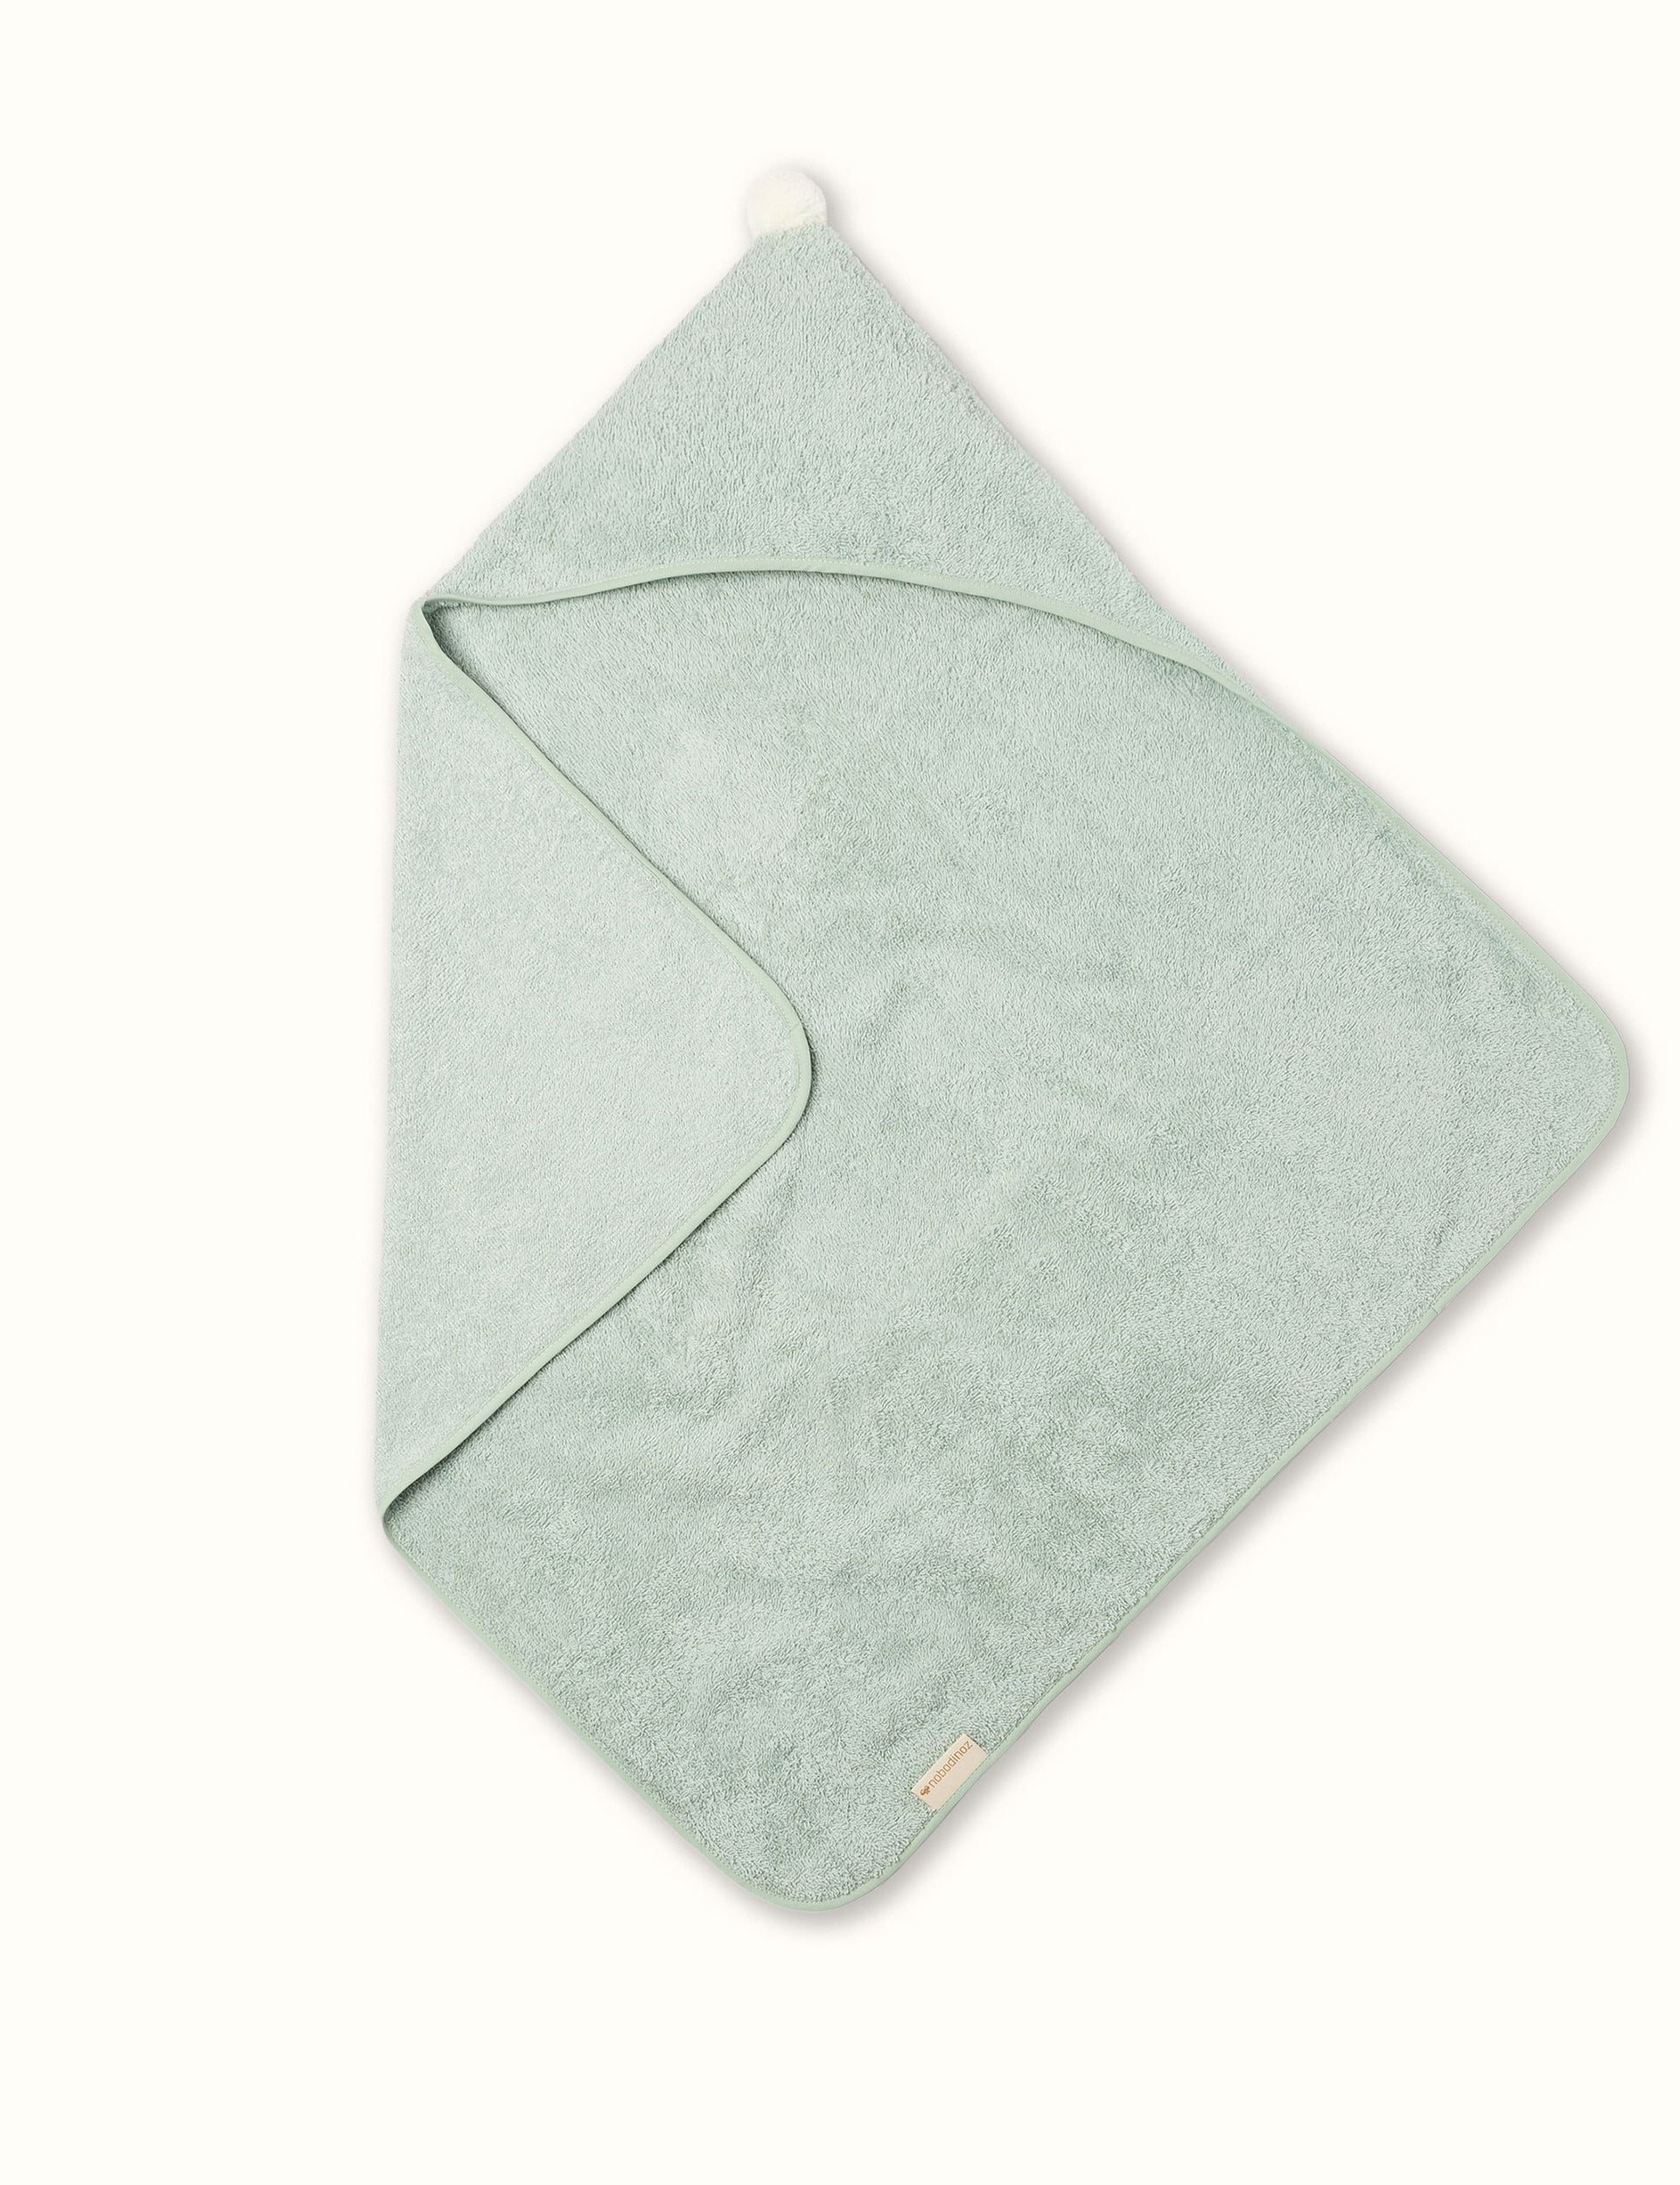 Nobodinoz So Cute Baby Hooded Bath Towel - Green